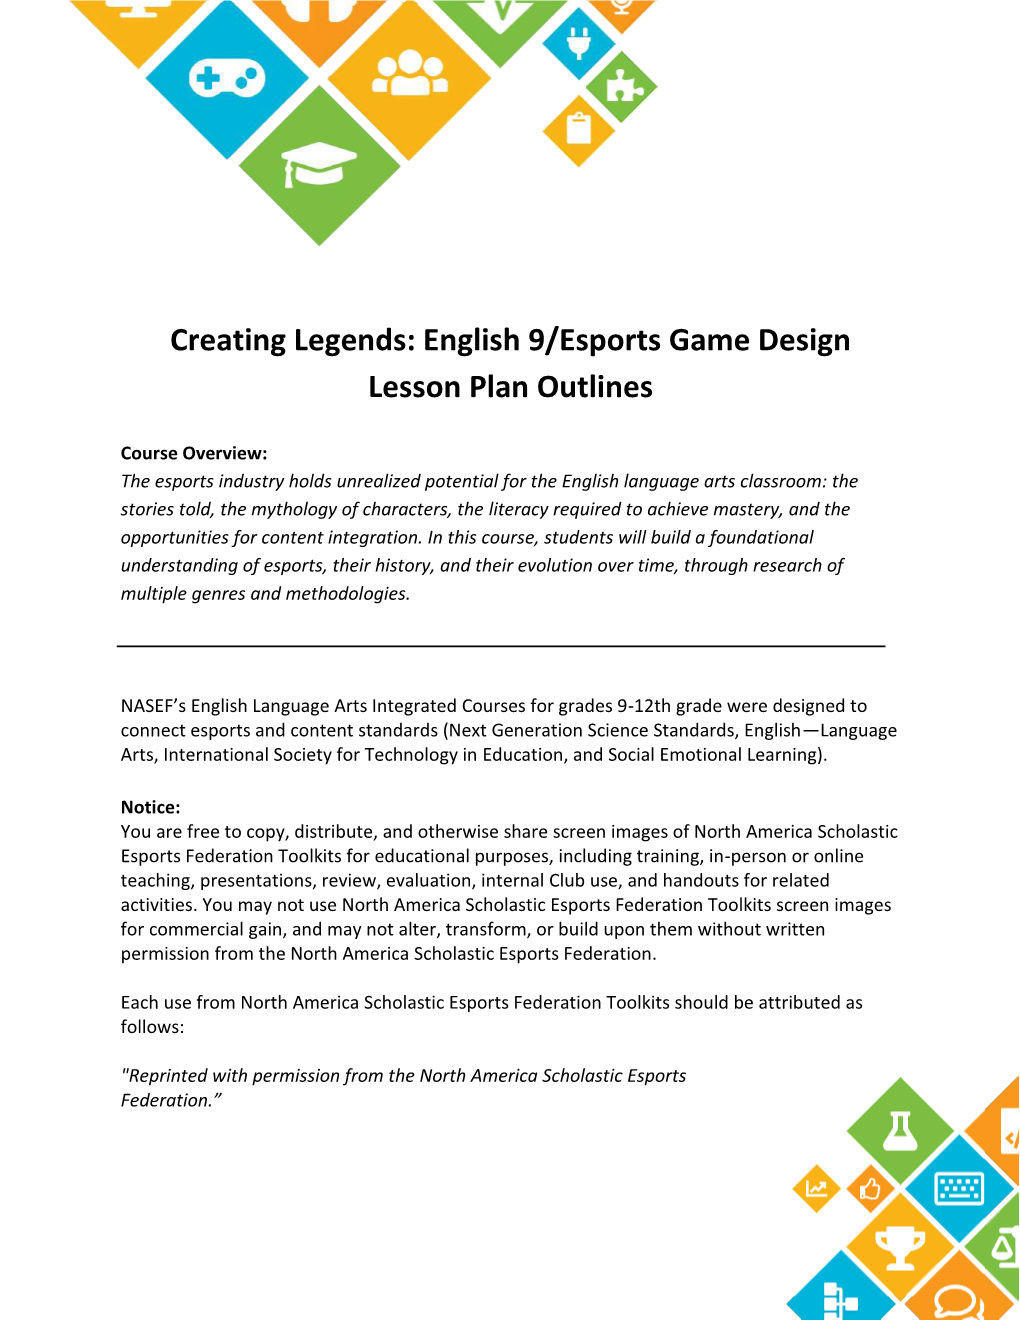 English 9/Esports Game Design Lesson Plan Outlines